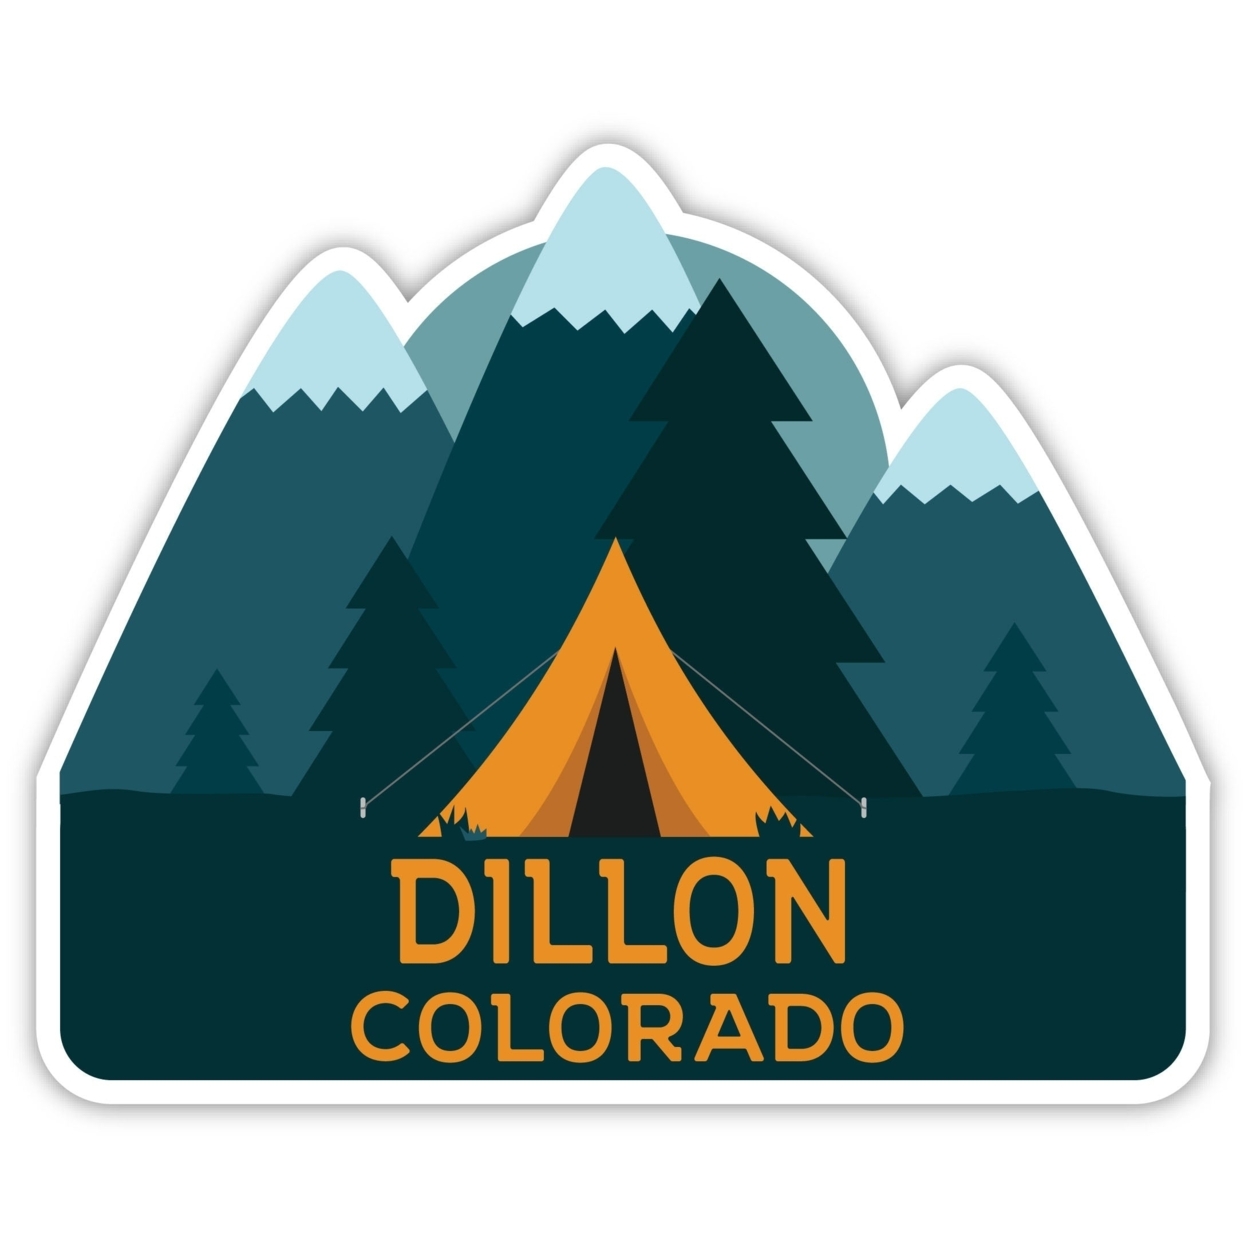 Dillon Colorado Souvenir Decorative Stickers (Choose Theme And Size) - Single Unit, 6-Inch, Camp Life